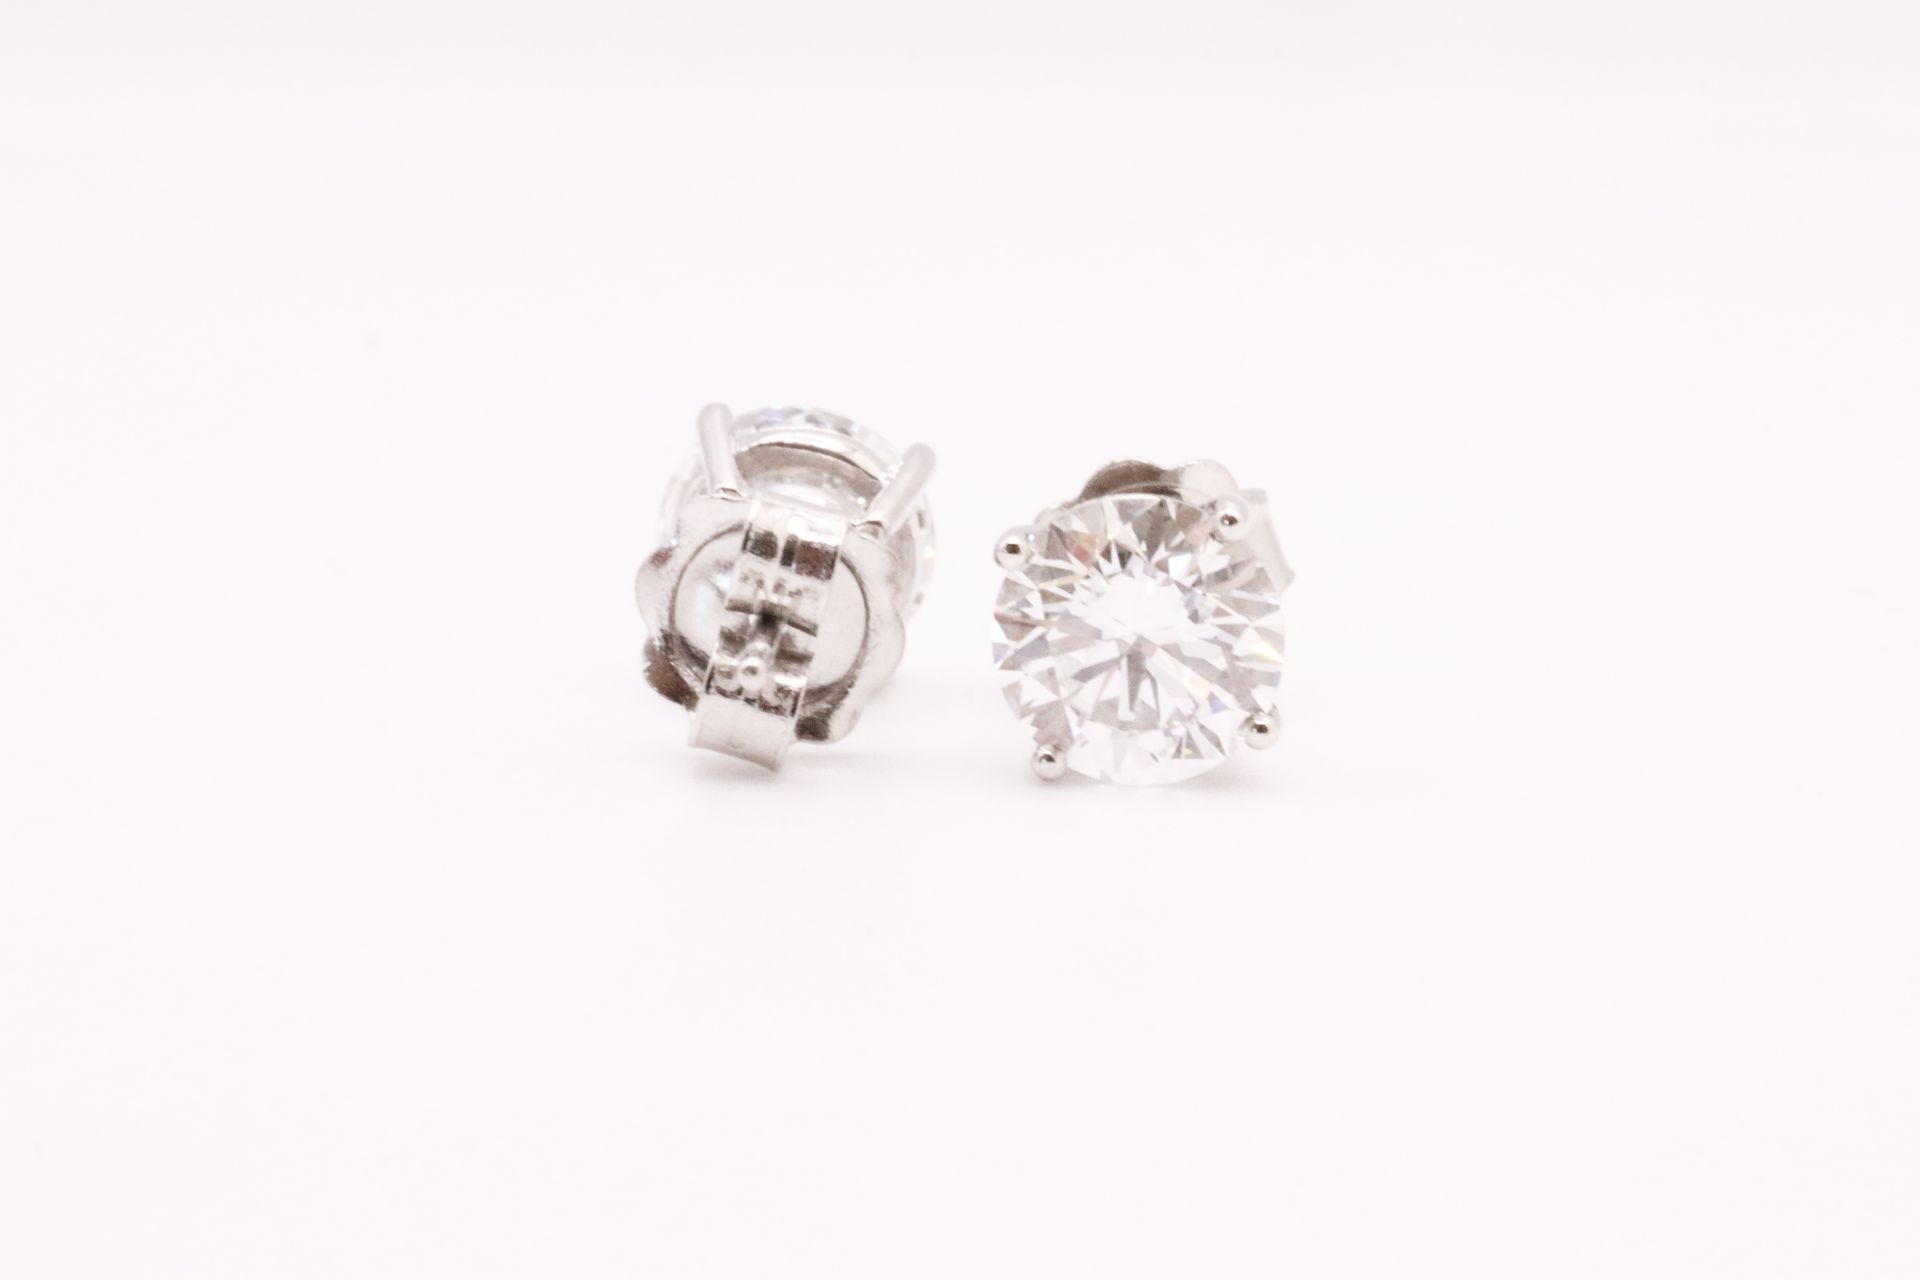 Round Brilliant Cut 3.00 Carat Natural Diamond Earrings 18kt White Gold - Colour E - VS Clarity- GIA - Image 2 of 6